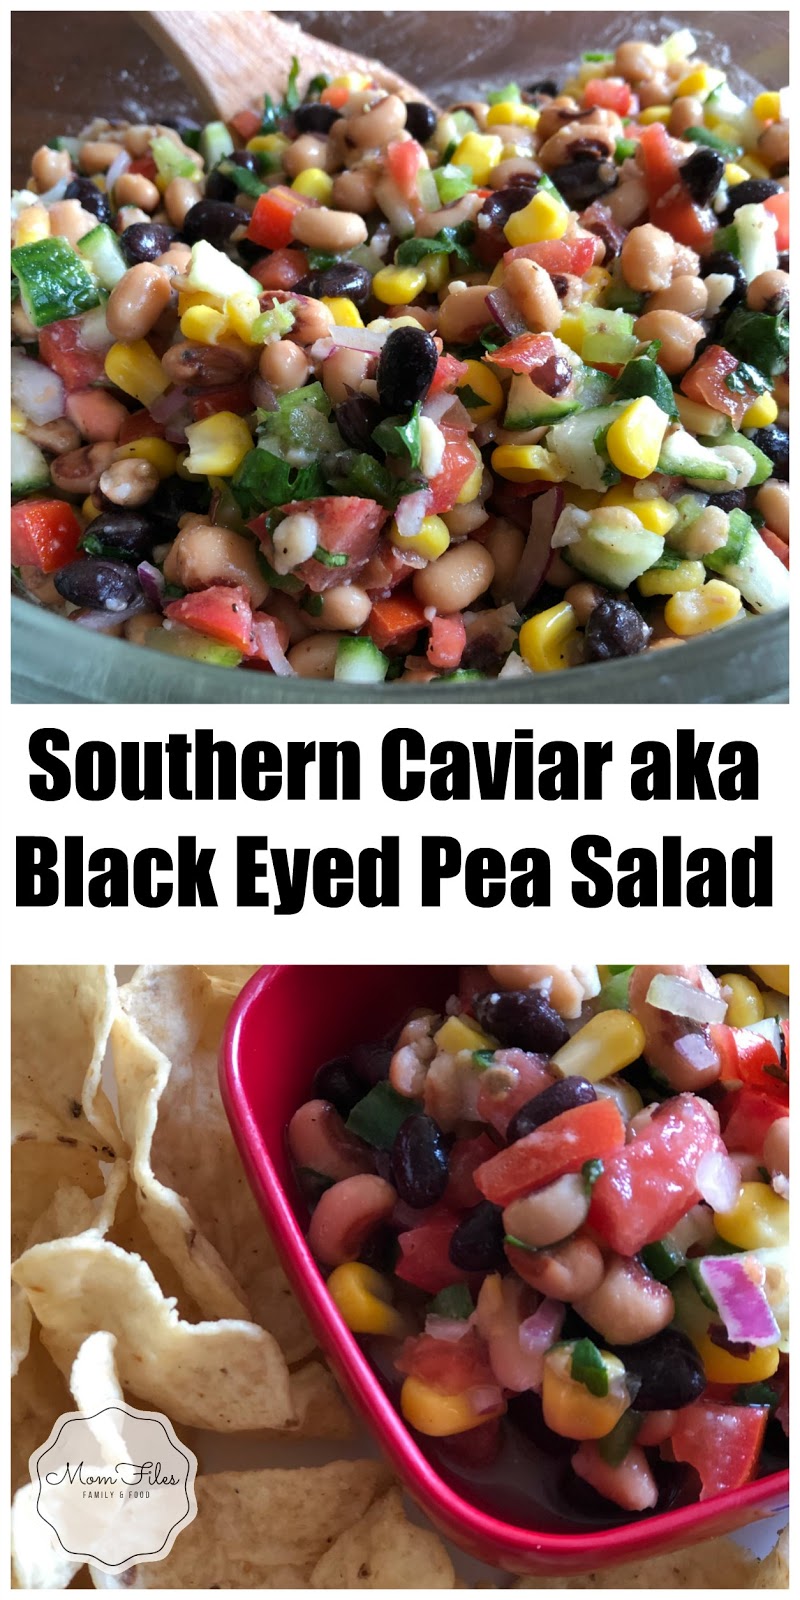 Southern Caviar aka Black Eyed Pea Salad Recipe | Mom Files